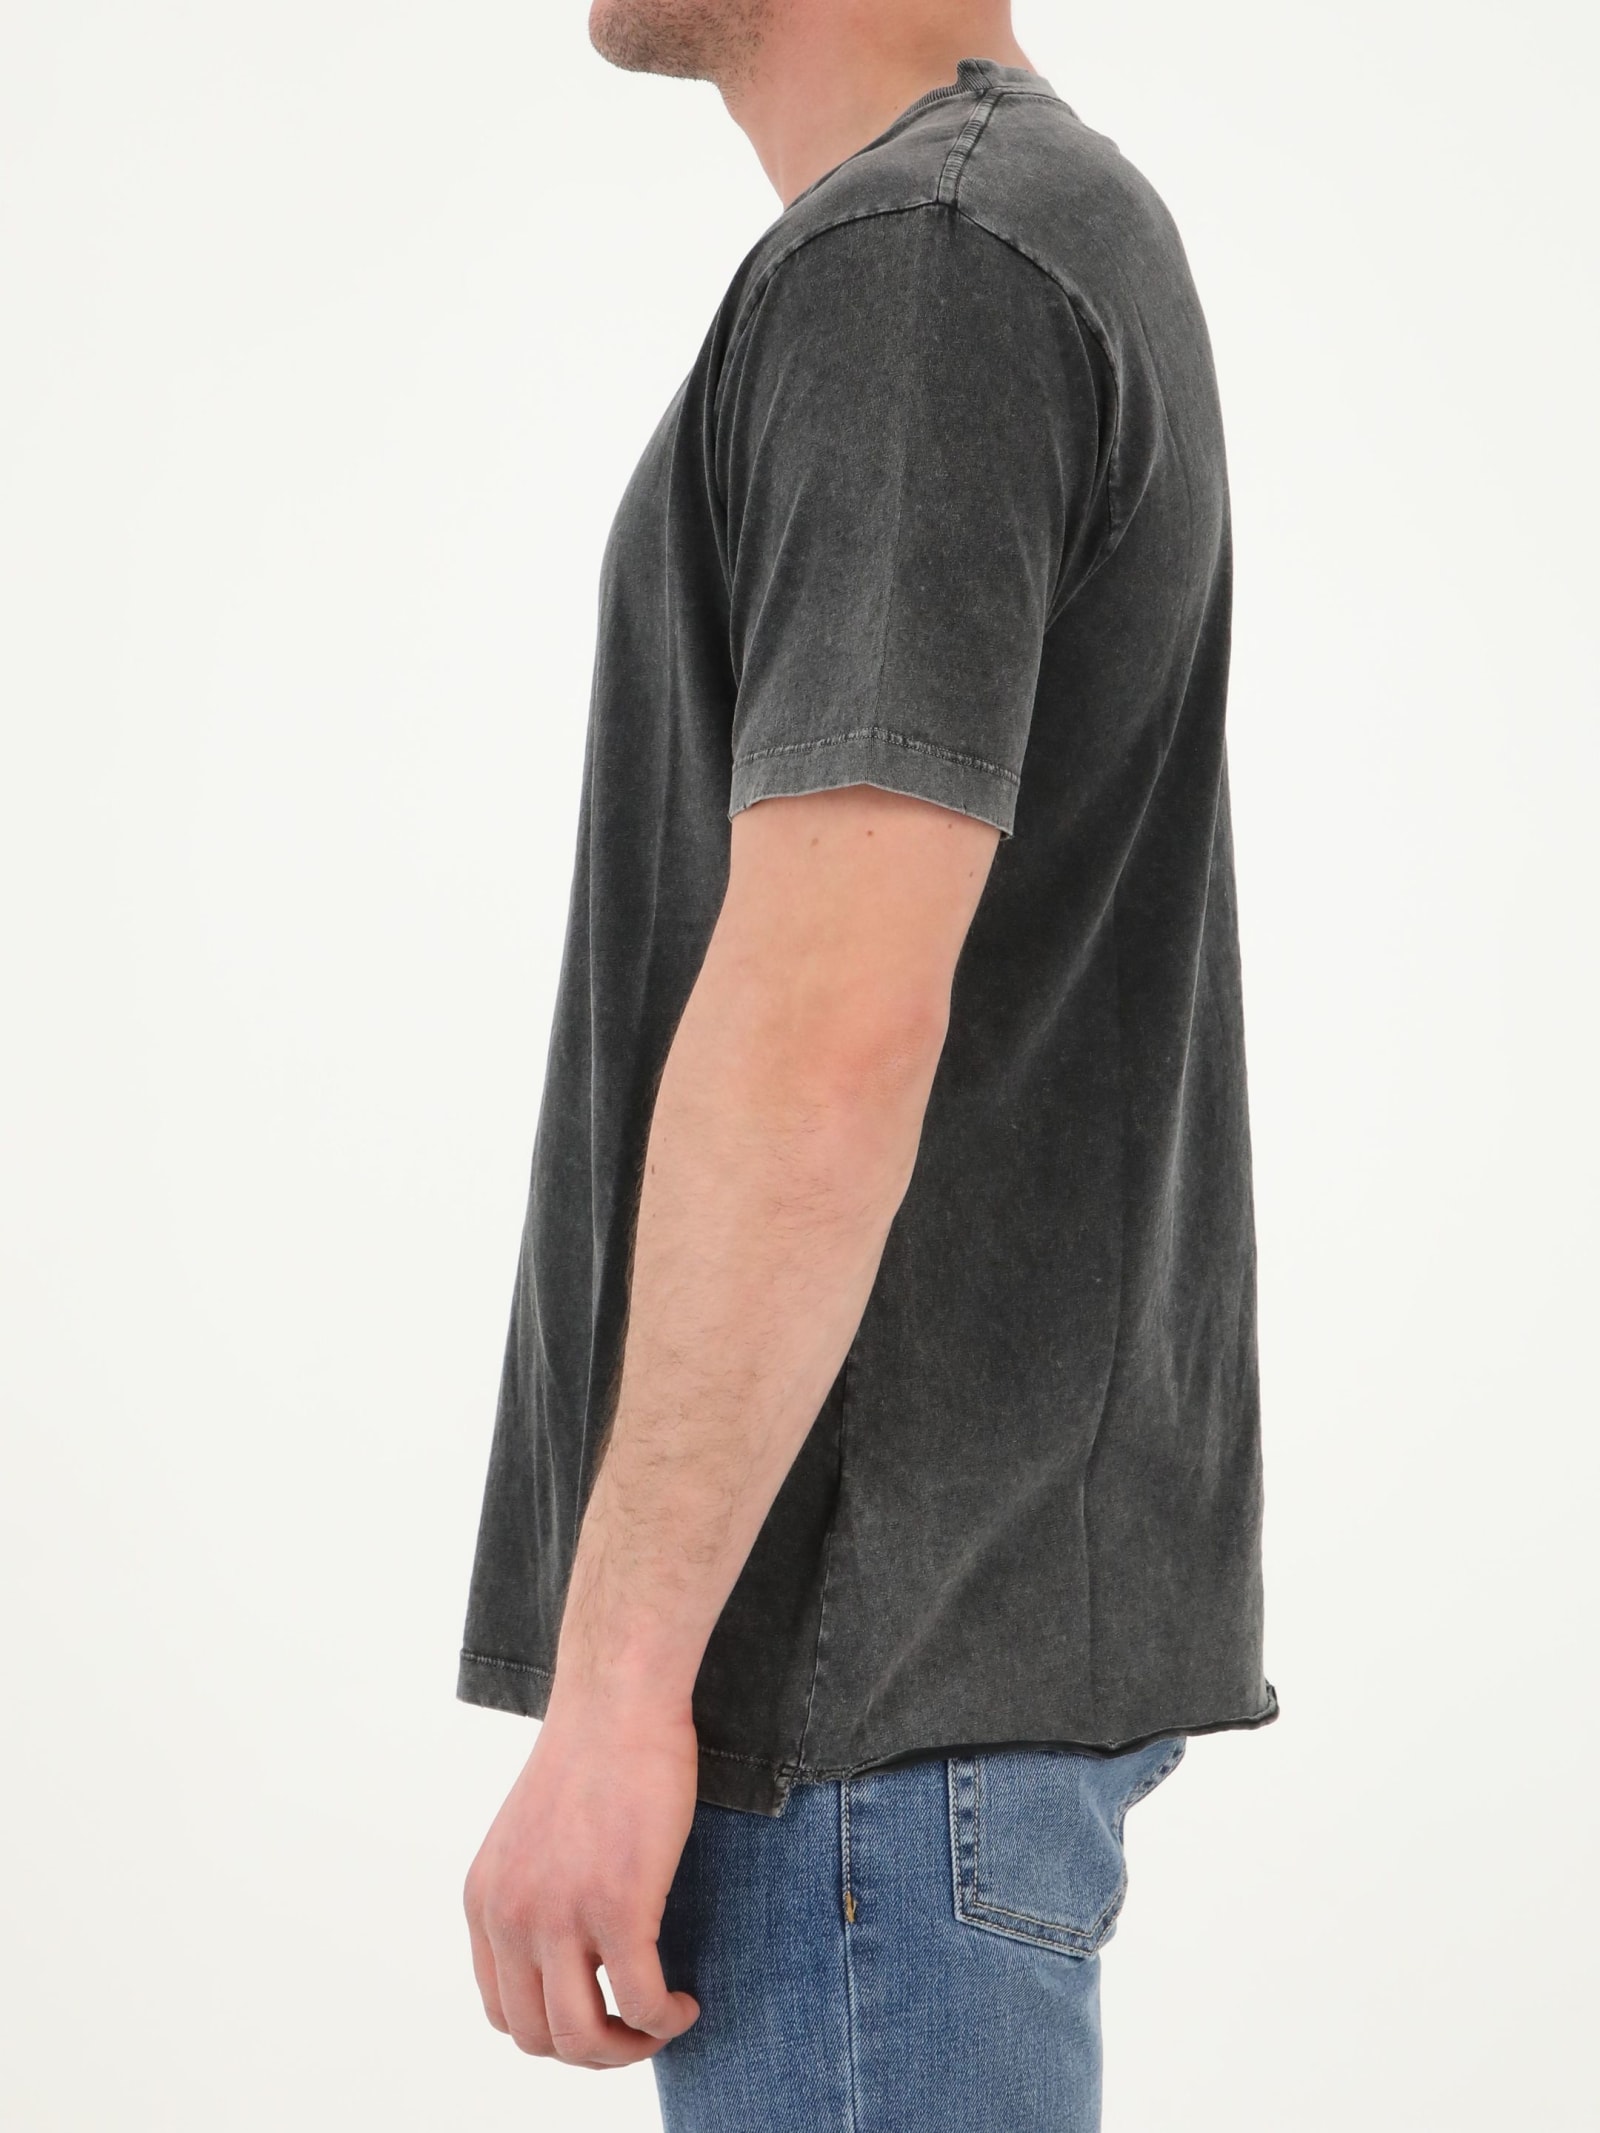 NWT Saint Laurent YSL Dark Gray Destroyed Skeleton Logo Soft Tee Shirt Sz S  $495